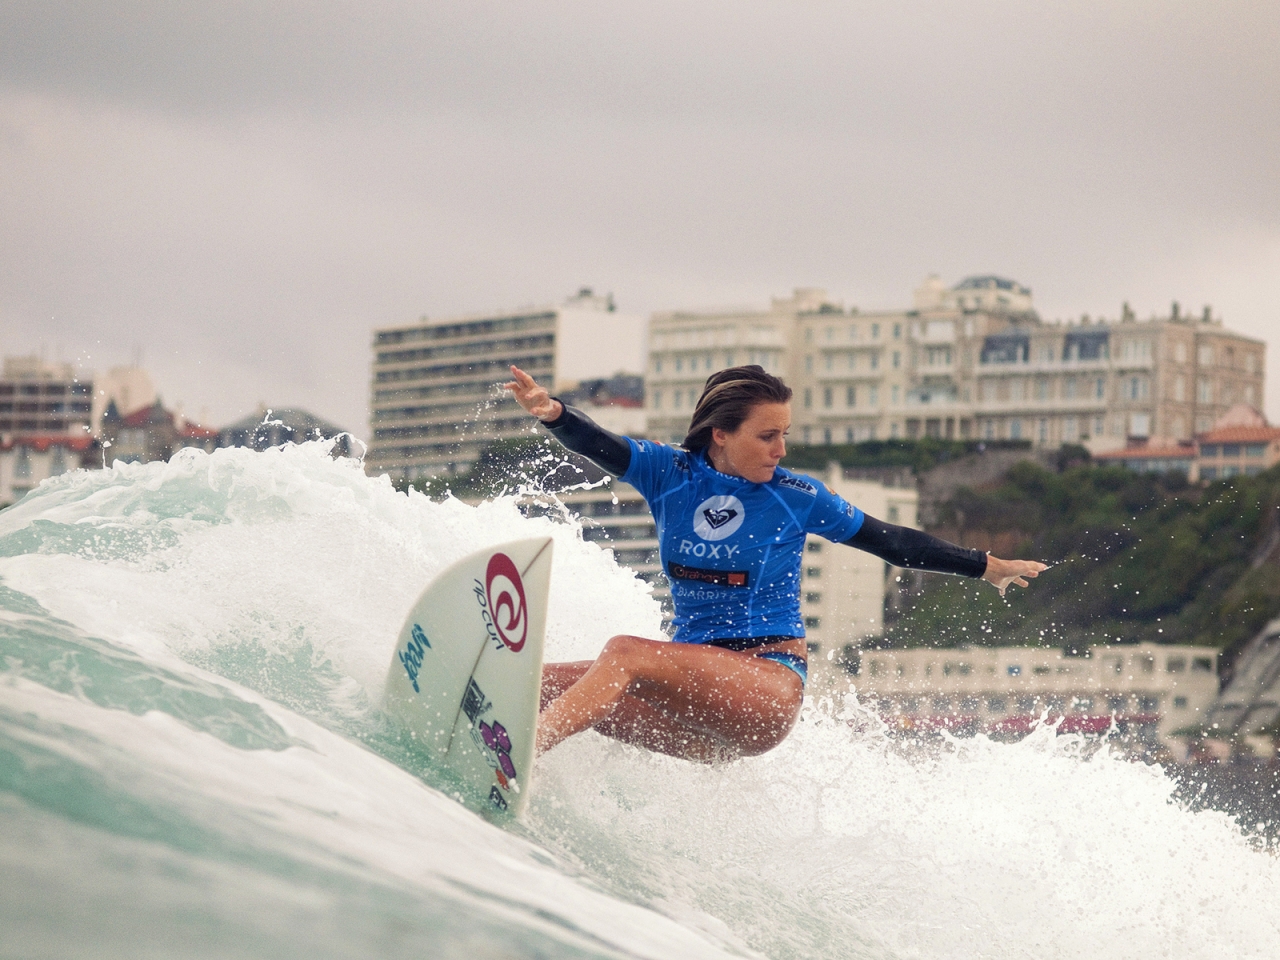 Alana Blanchard Surfing for 1280 x 960 resolution